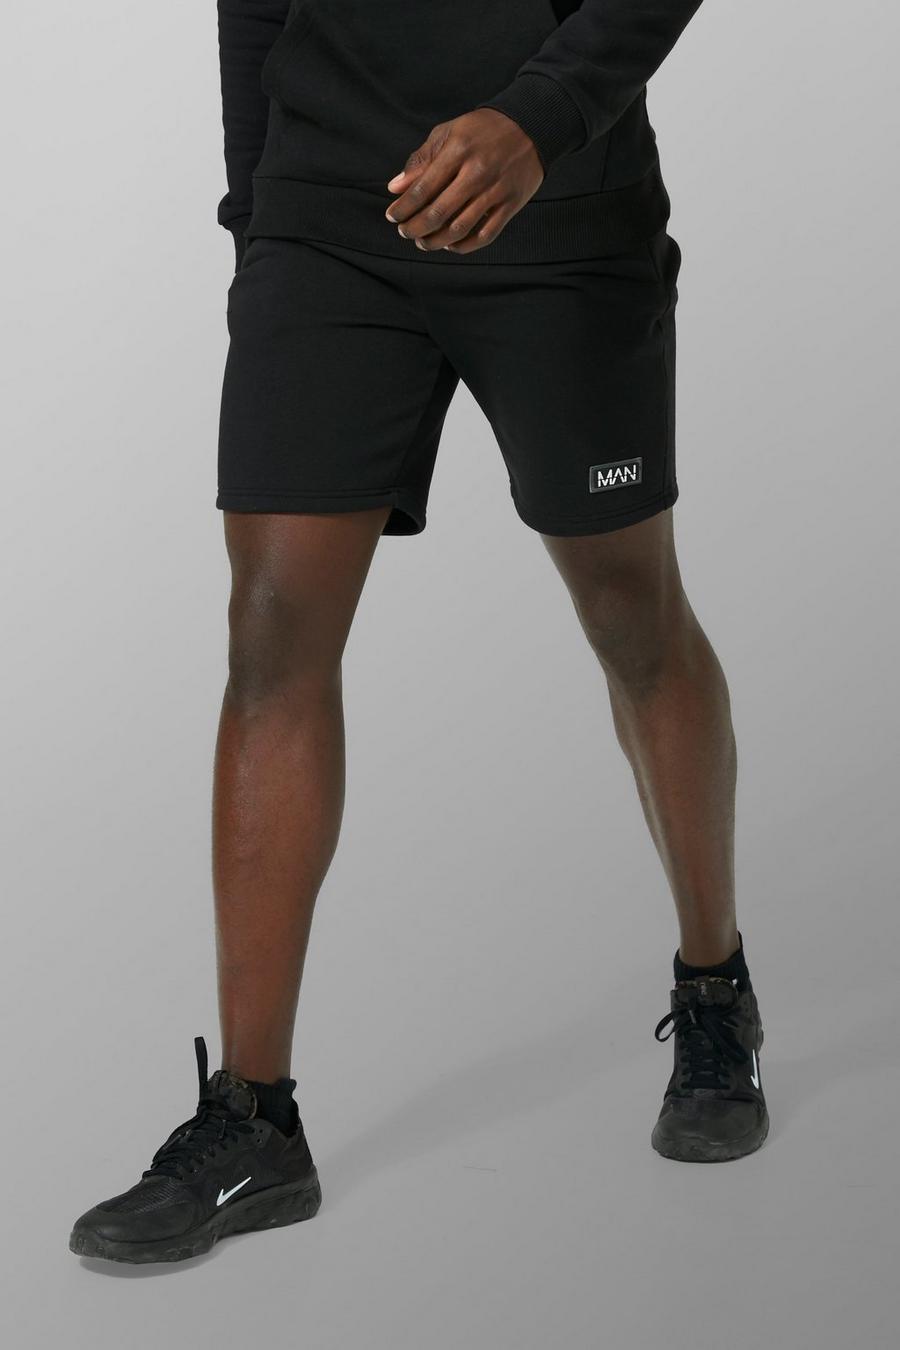 Short de sport - MAN, Black noir